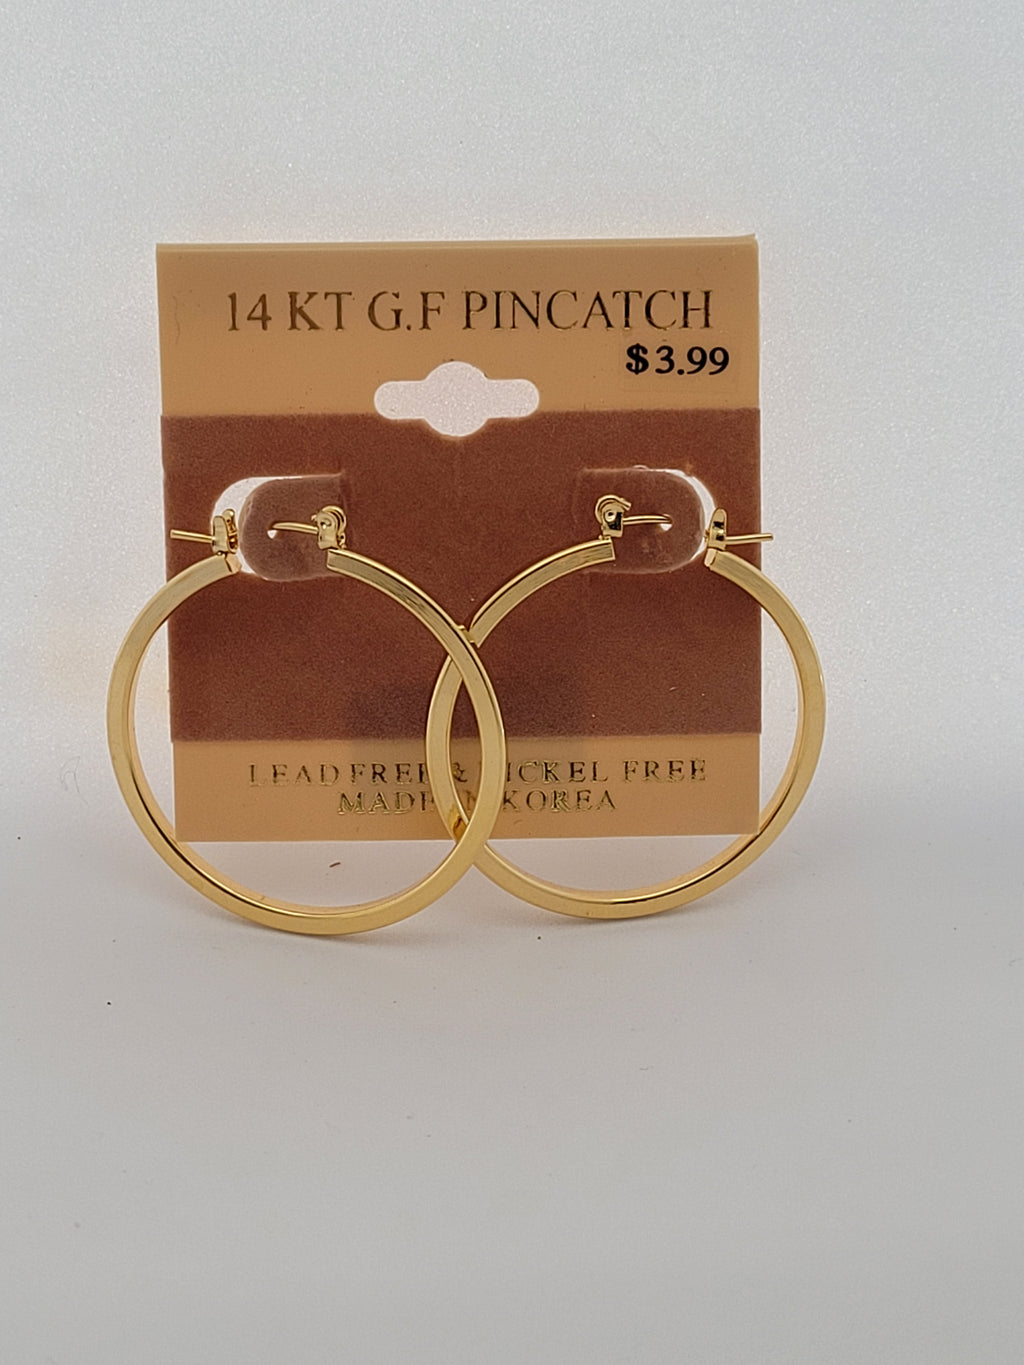 14 KT G.F Pincatch Gold Earring 350835